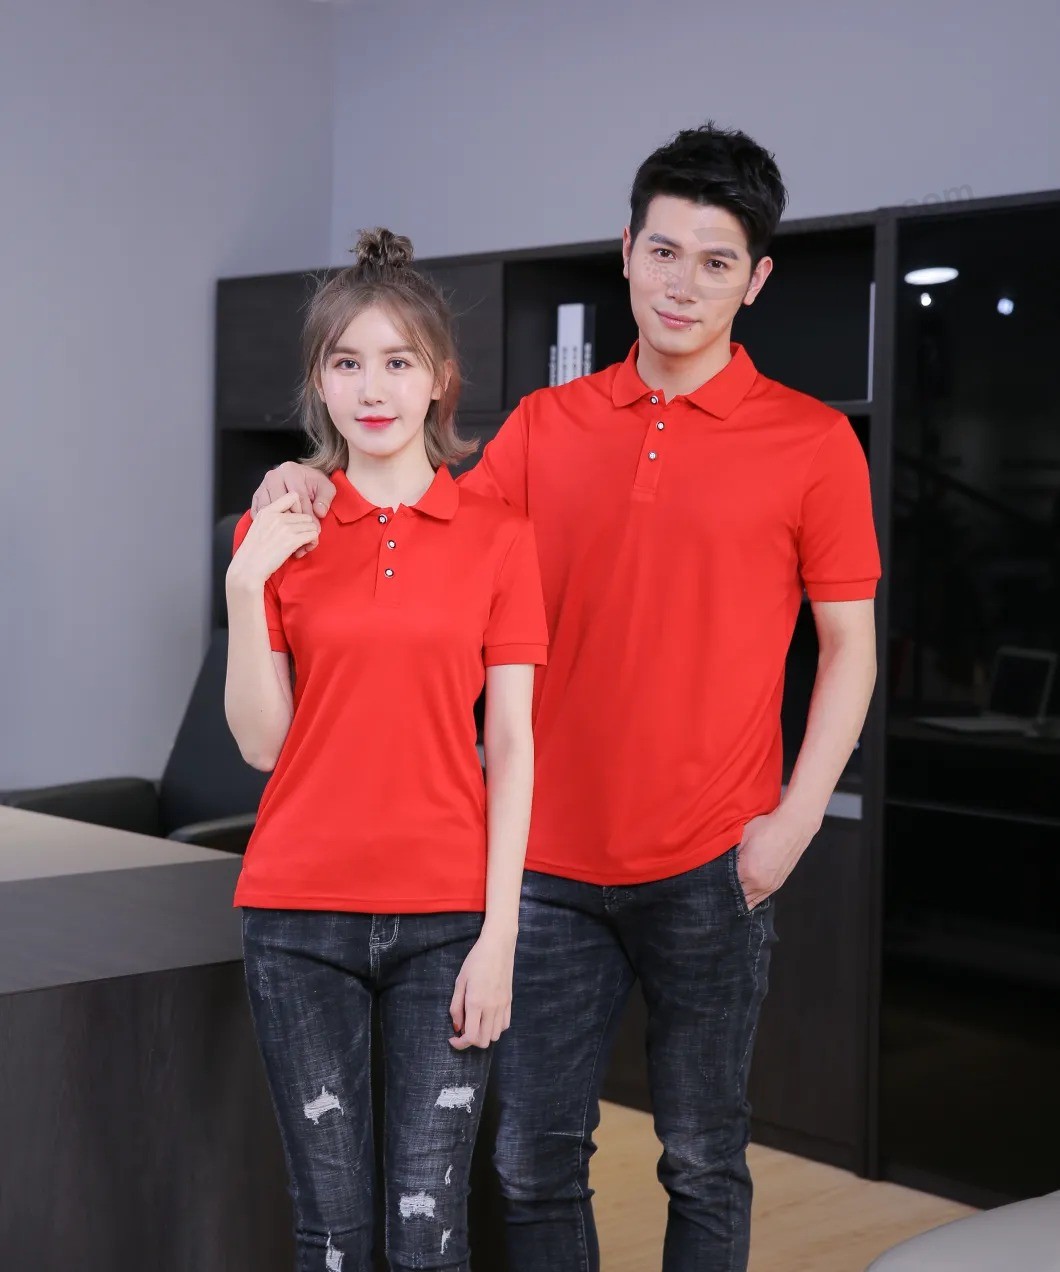 Werbung Basic Herren und Damen Polo T-Shirt, Firma Uniform Polo Shirt